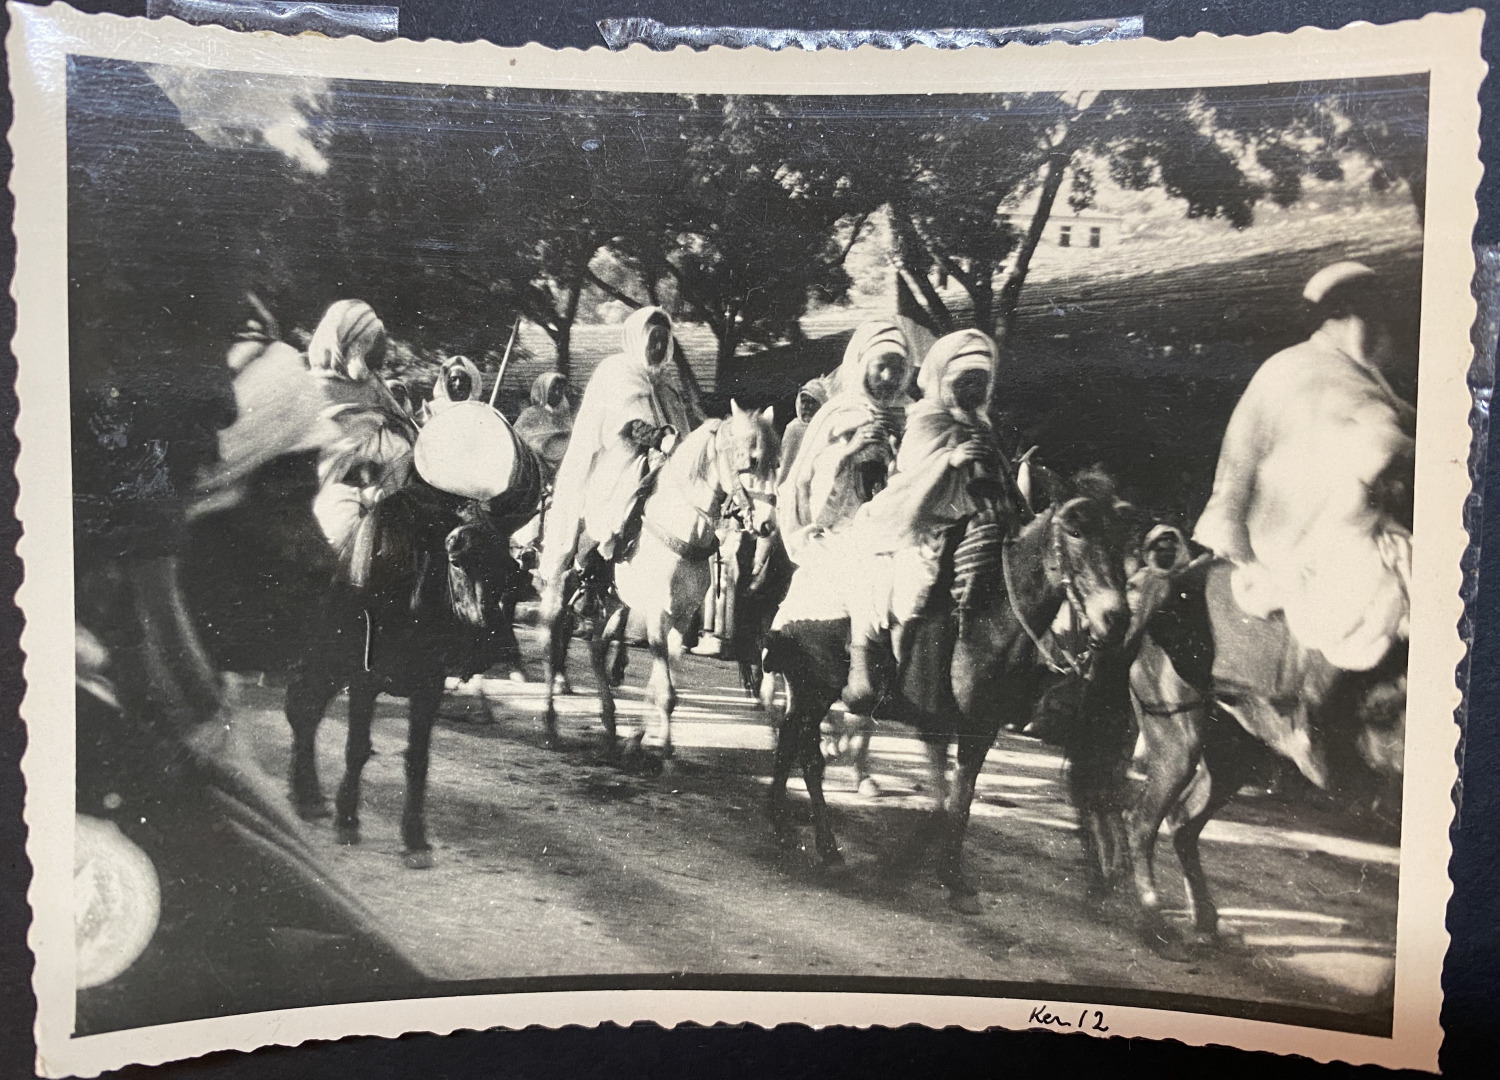 Algeria, Kherrata, visit of King Edward VII, the nuba parade, 1905 Vintage if